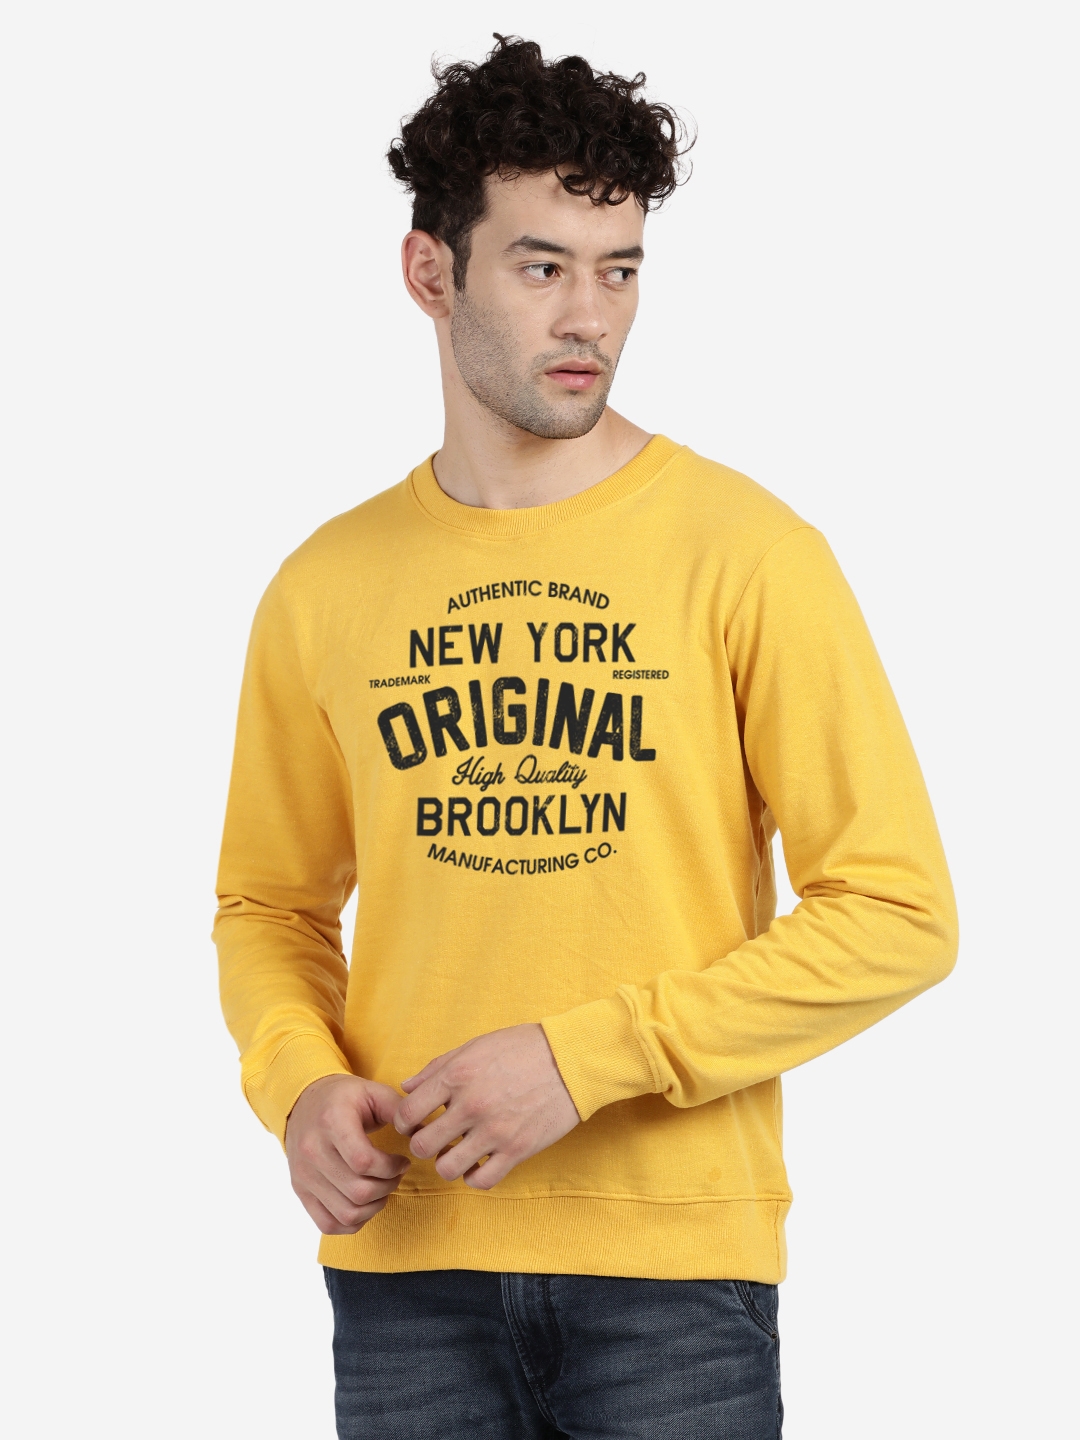 BLACK RADIO Men's Round Neck Printed Yellow Sweatshirt